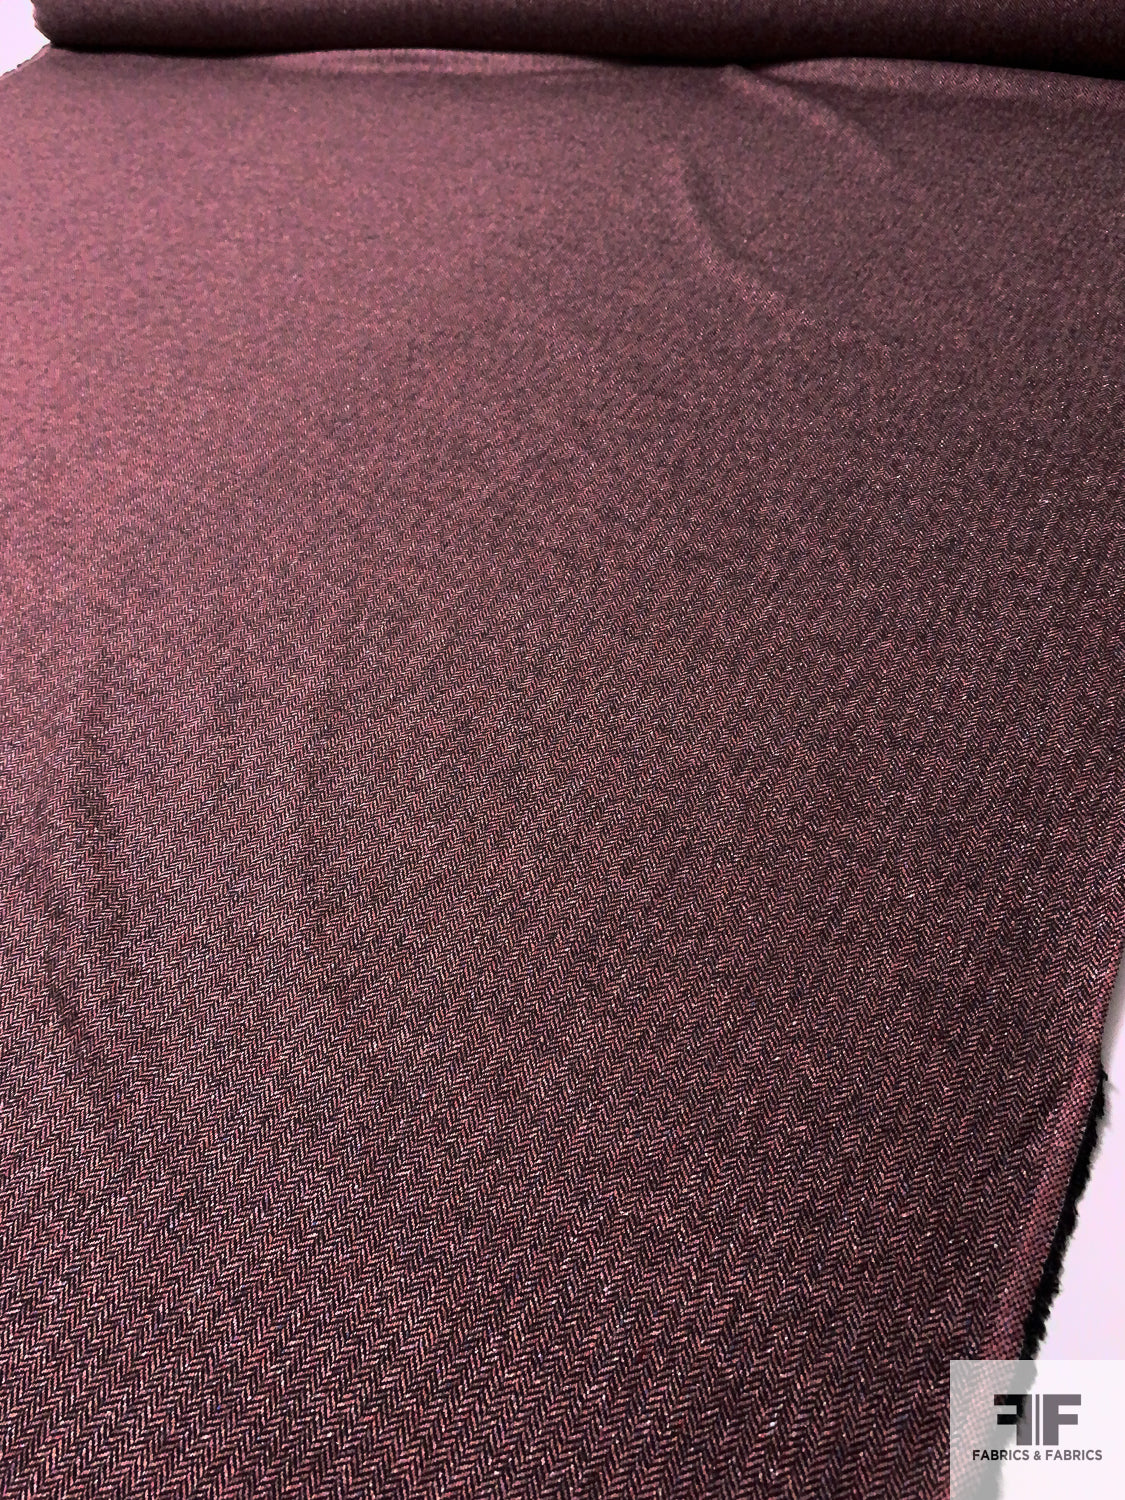 Small Herringbone Speckled Tweed Suiting - Shade of Dusty Pink / Black / Blue